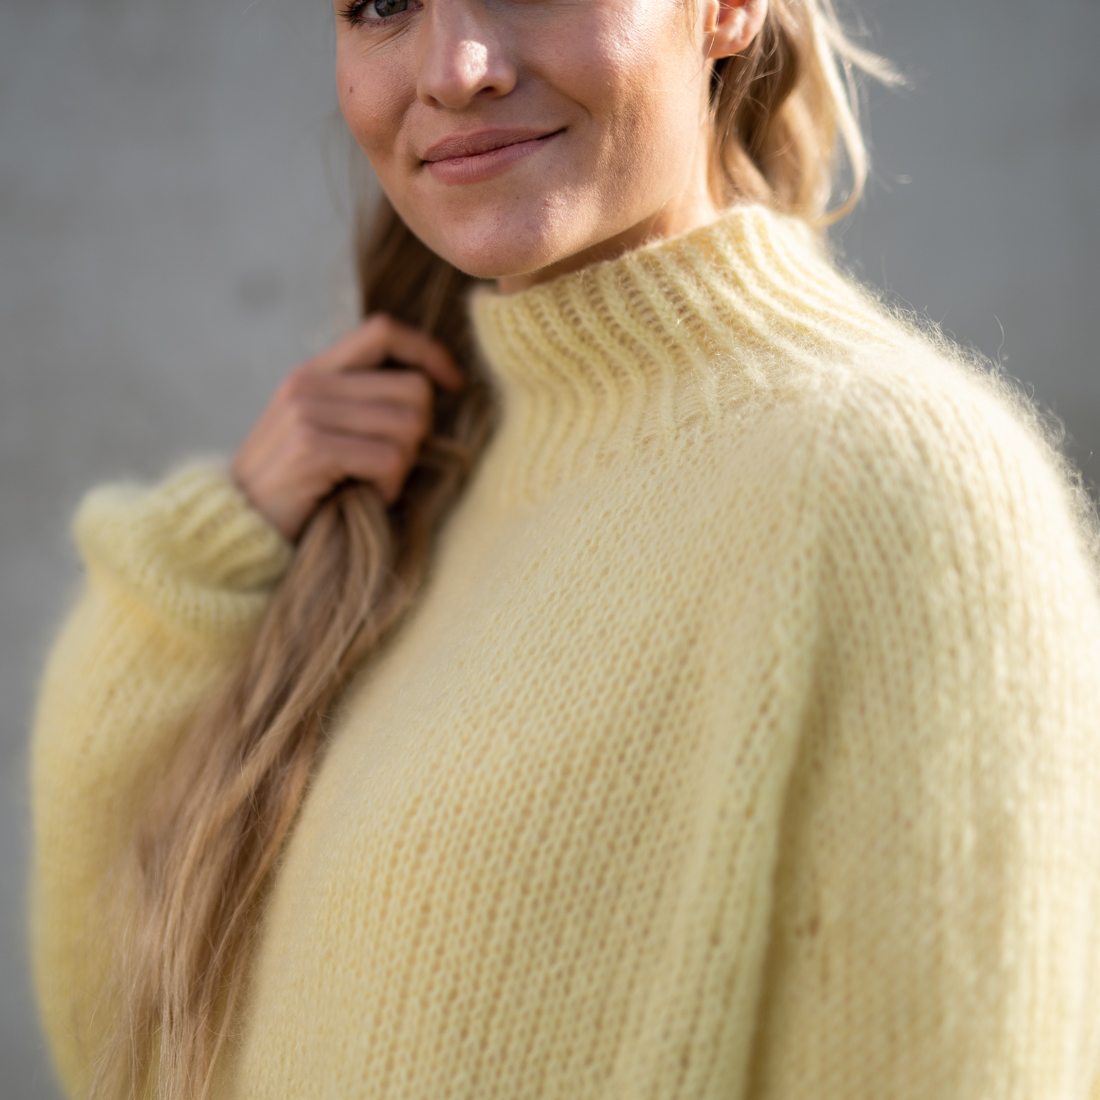  - Lemonade sweater | Turtleneck sweater knitting pattern - by HipKnithop - 09/10/2019